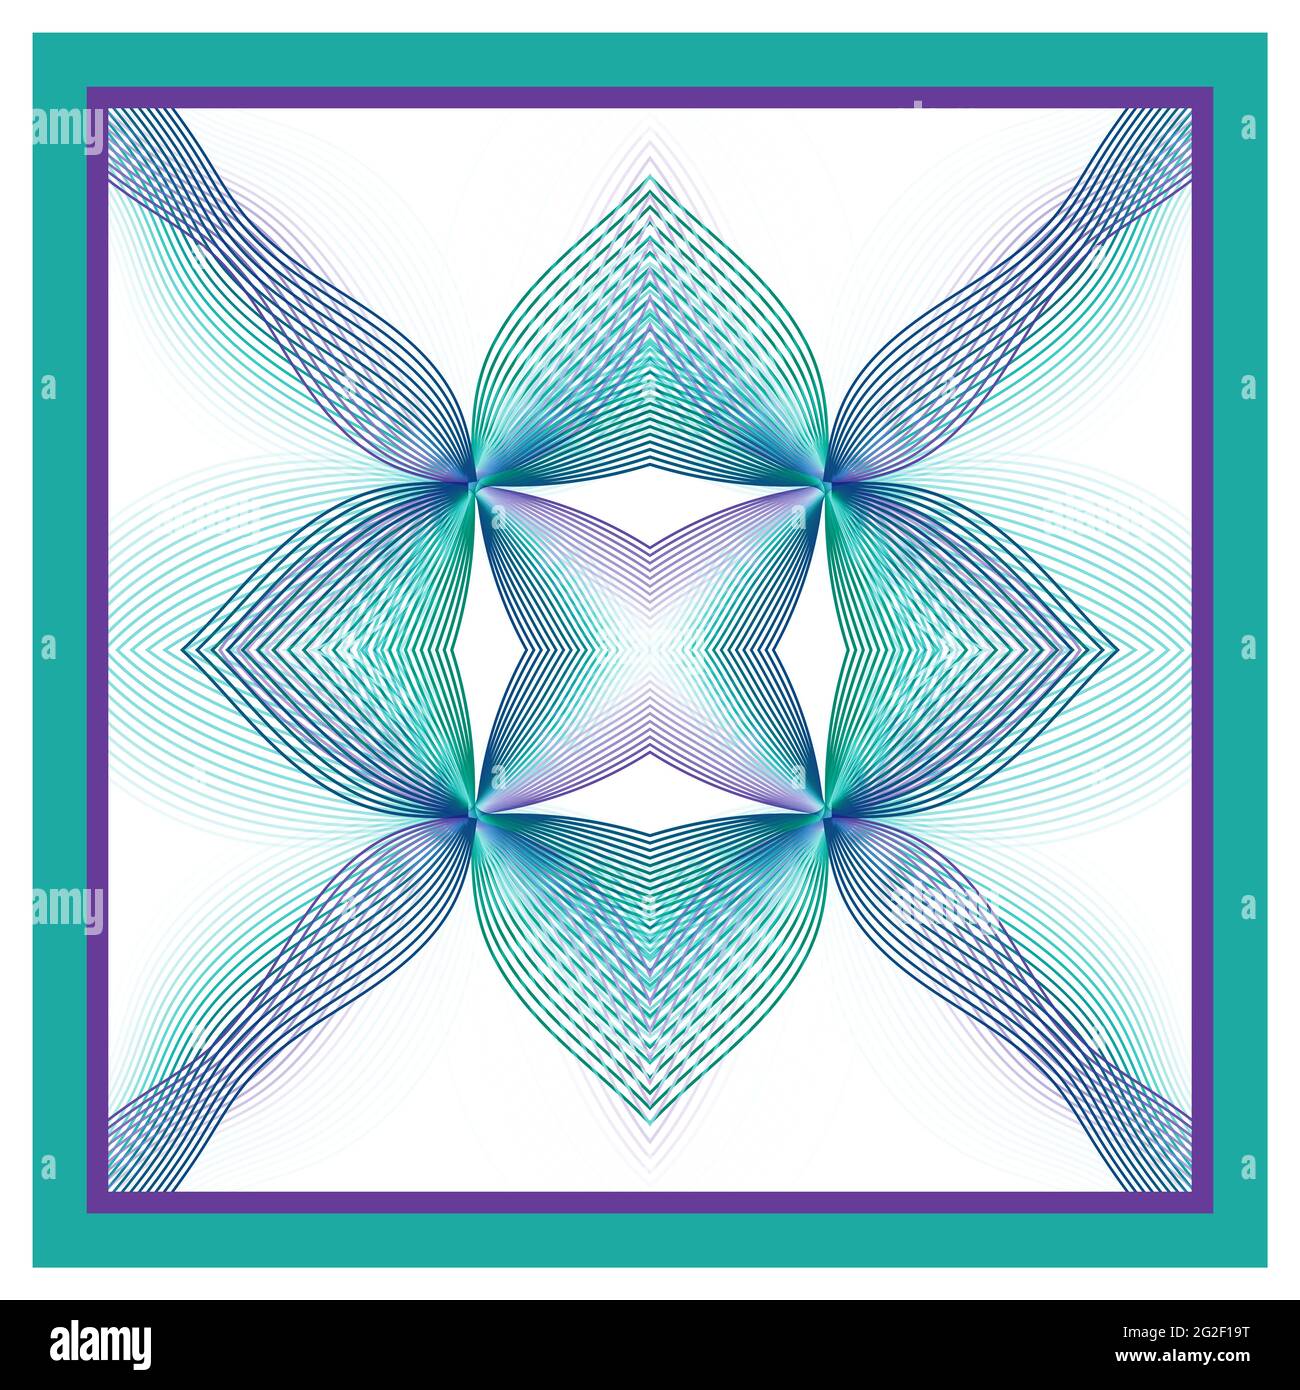 Shawl, bandana design. Blue, turquoise ornament, white background. Line art multicolored symmetric pattern. Kaleidoscope effect, mirror reflection Stock Photo